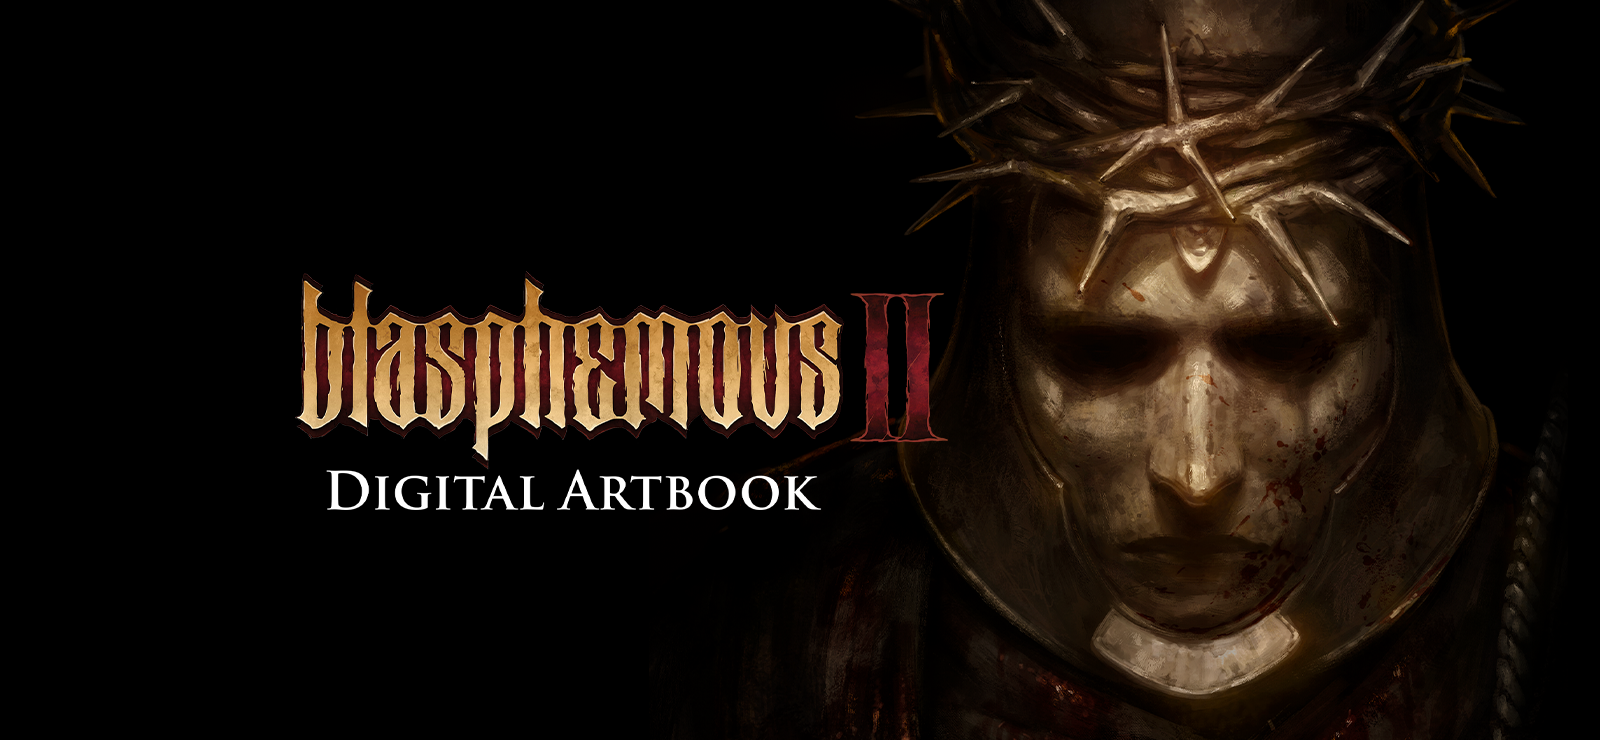 Blasphemous 2 Digital Artbook